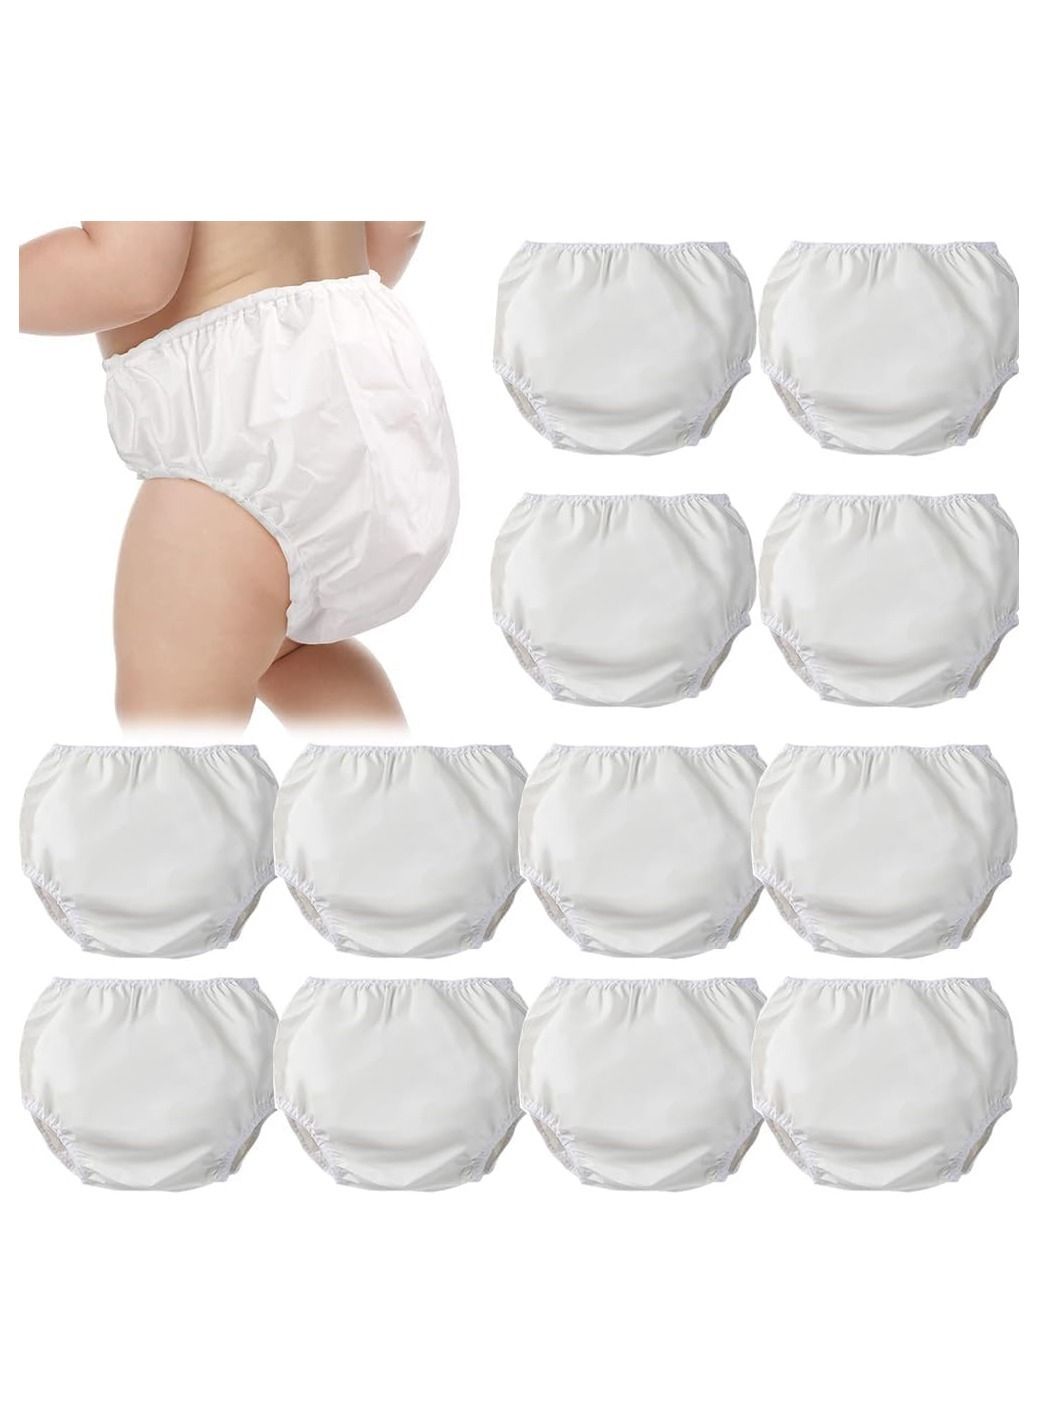 Cocomelon Toddler Boys Training Pants, 6 Pack, 2T-3T - Walmart.com